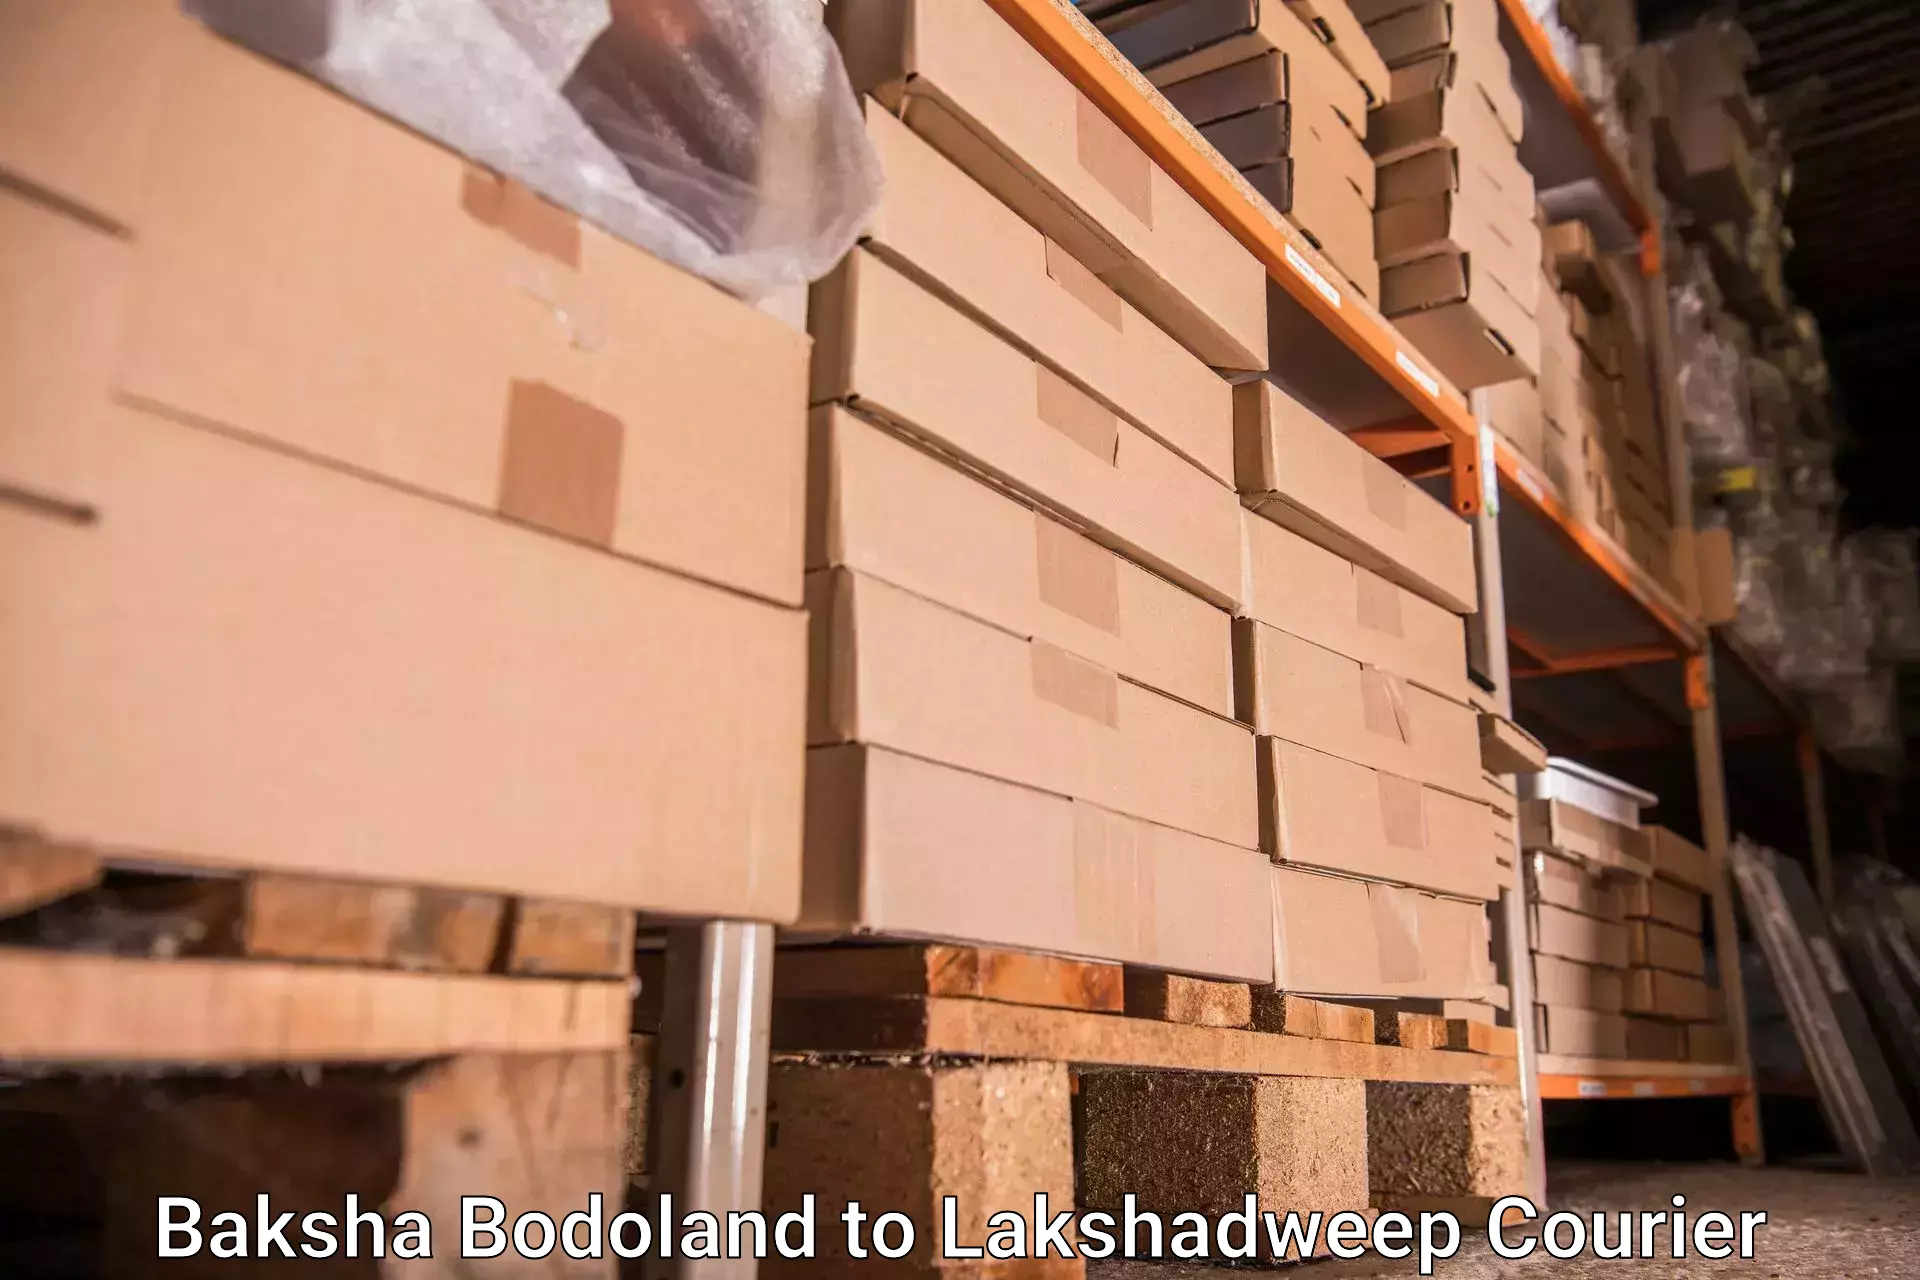 Baggage transport network Baksha Bodoland to Lakshadweep